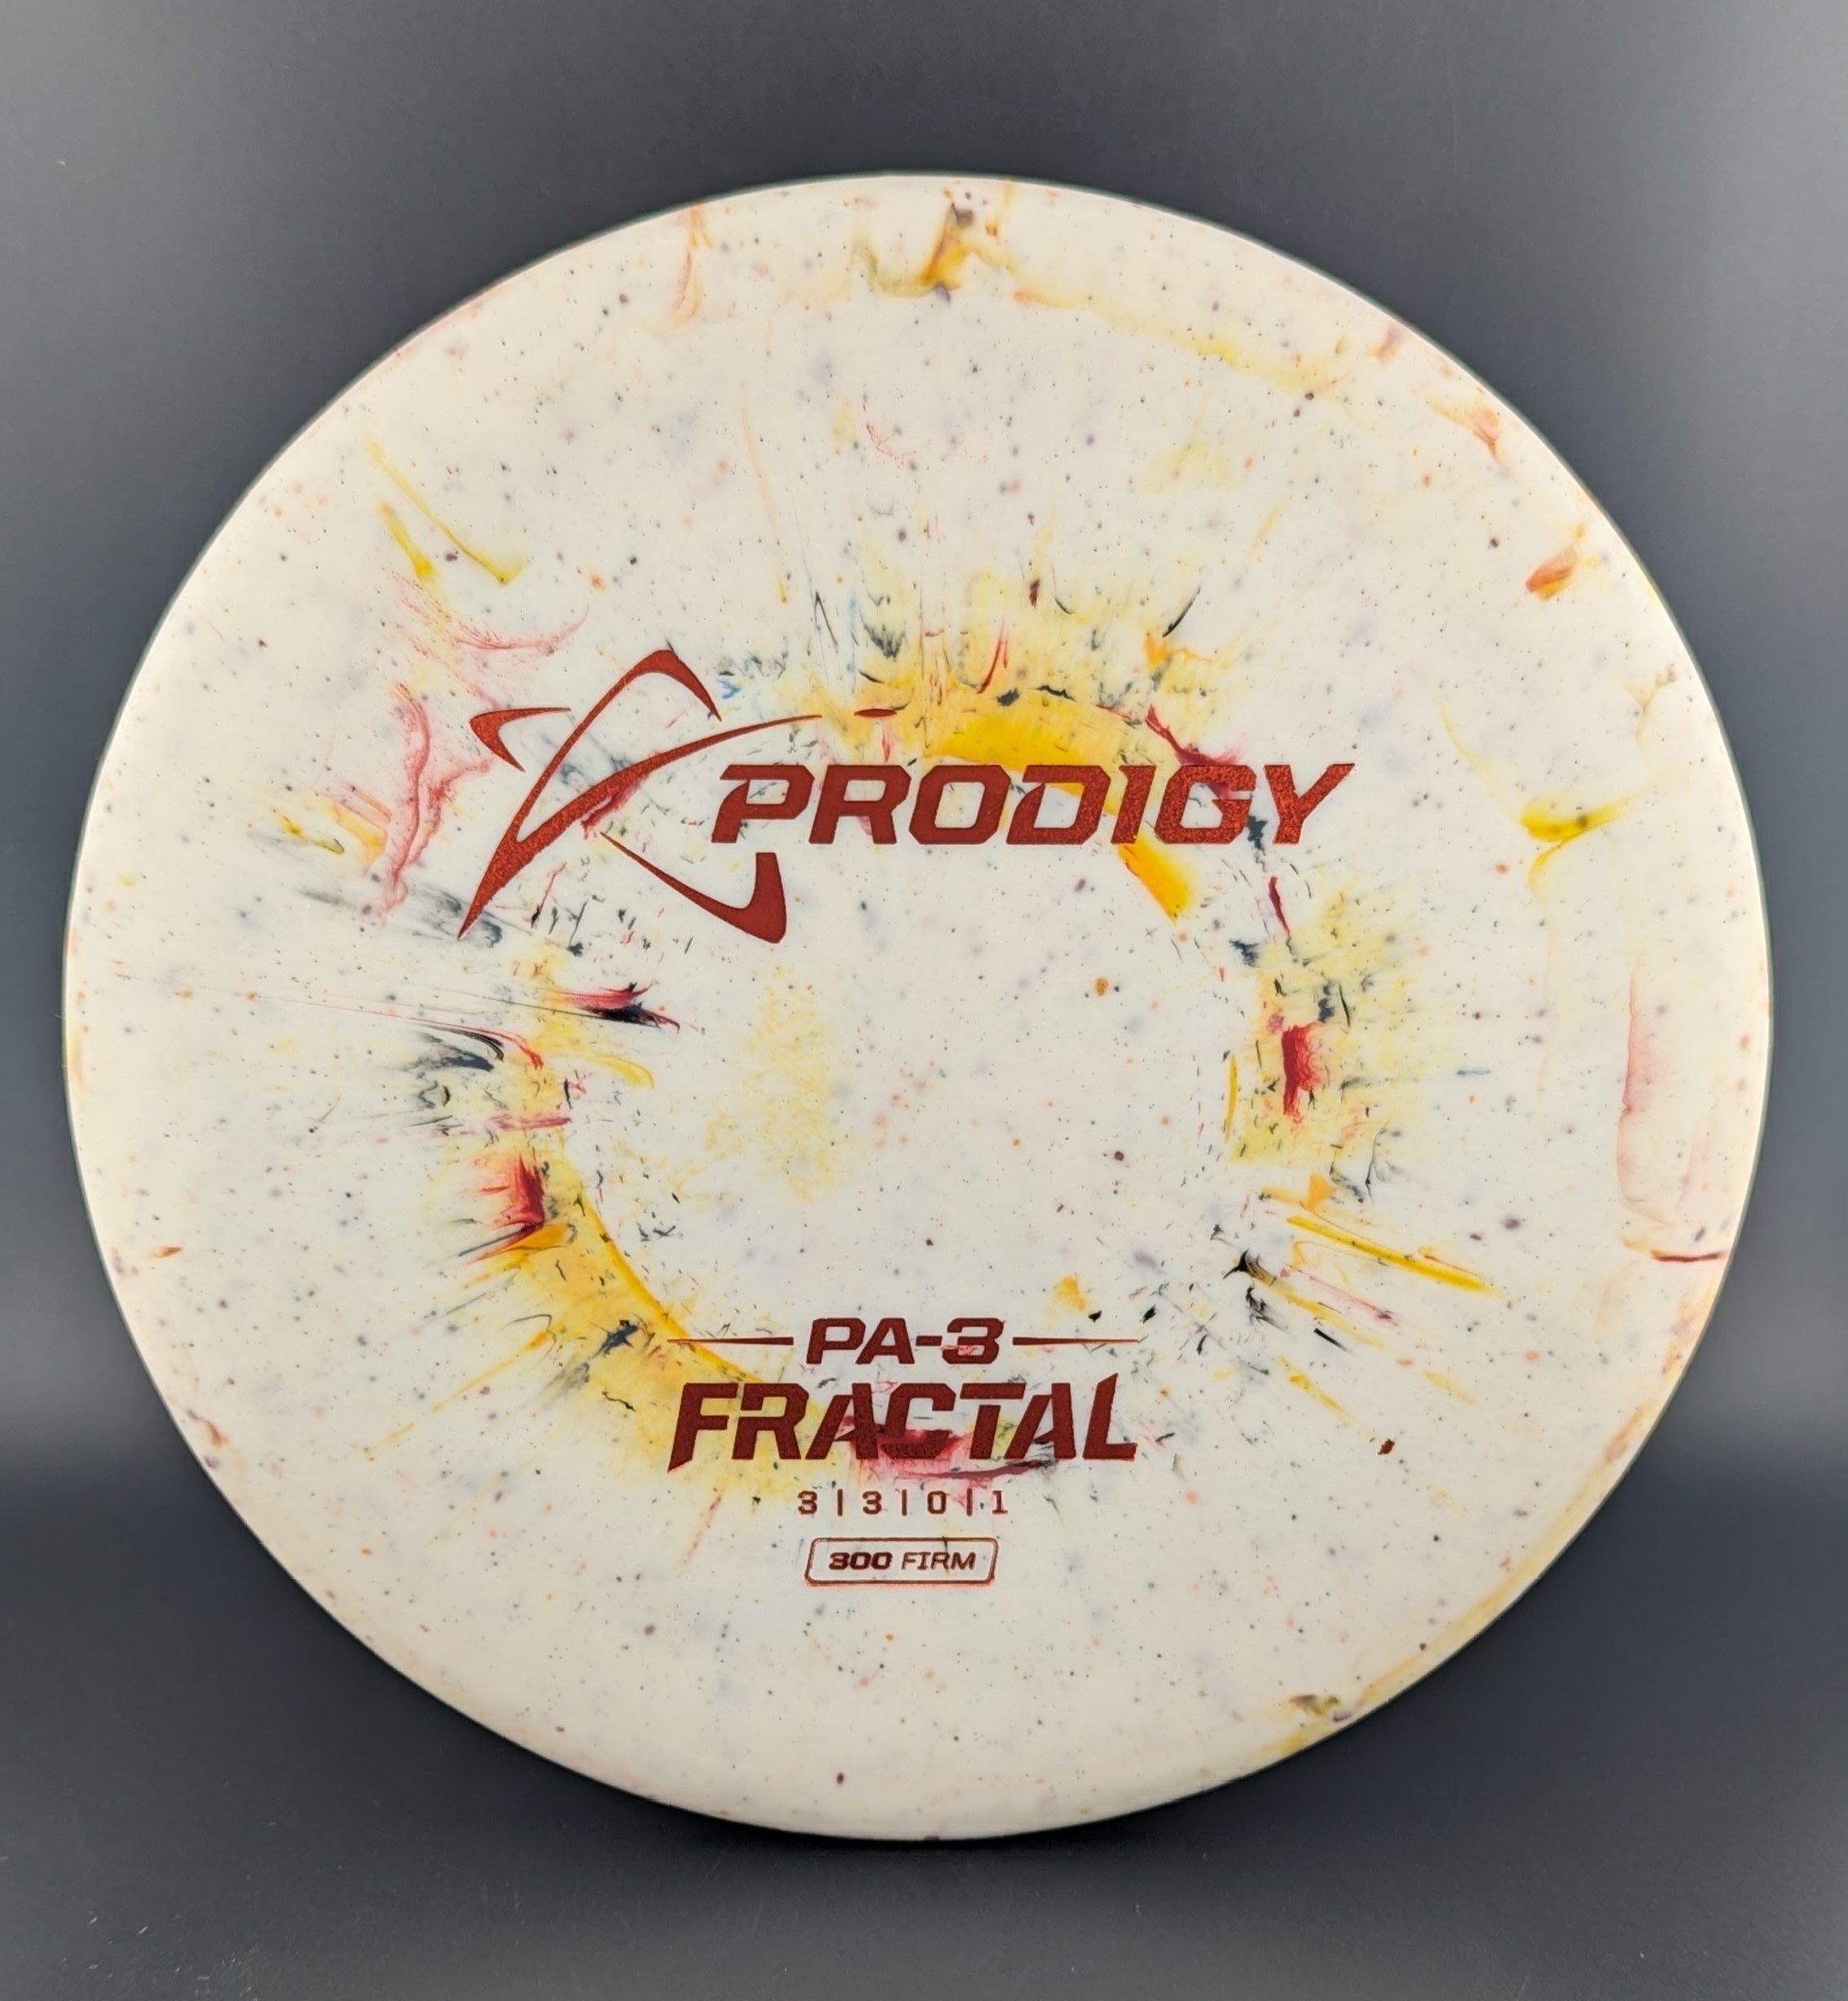 Prodigy 300 FIRM Fractal PA-3